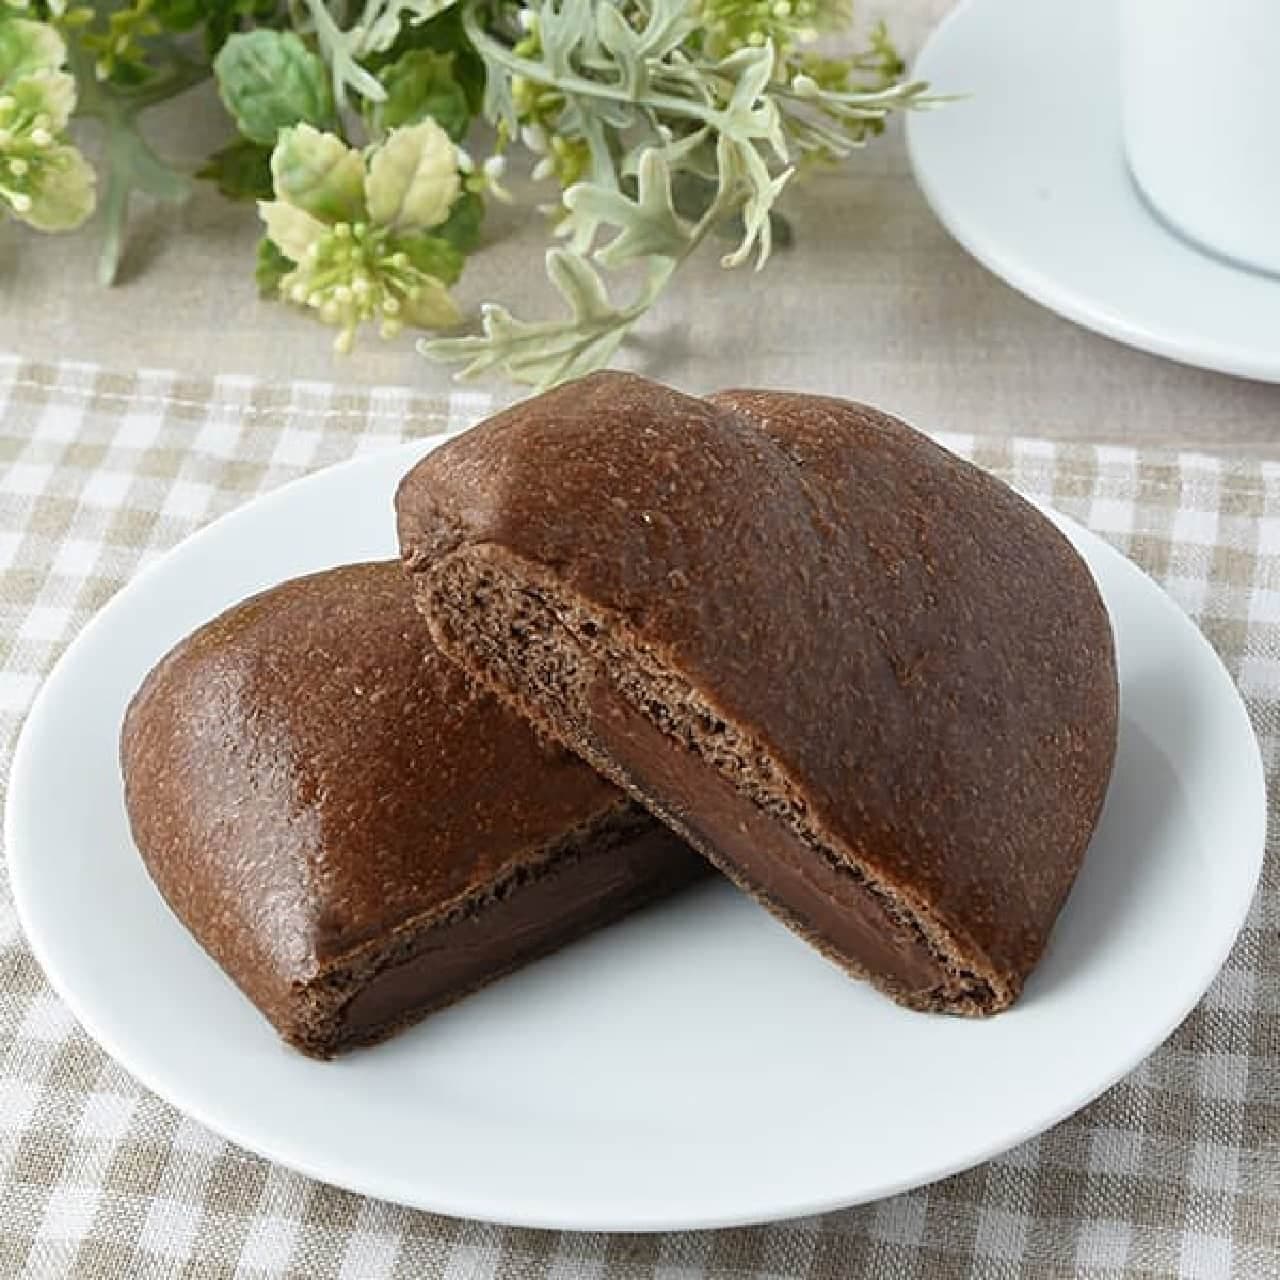 FamilyMart "Smooth Chocolate Cream Bread